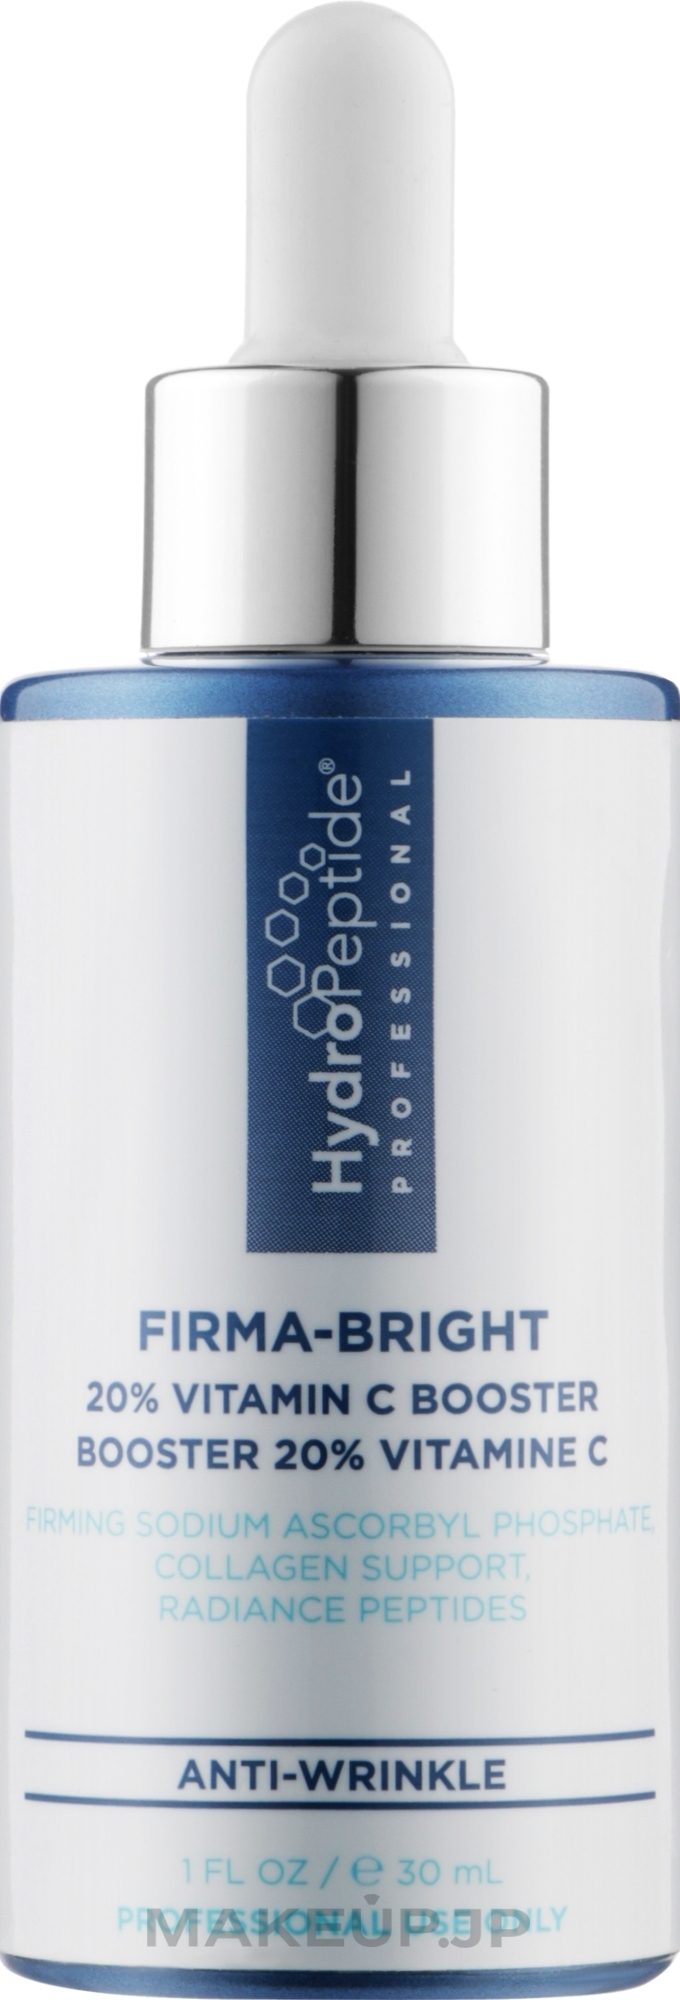 20% Vitamin C Booster - HydroPeptide Firma-Bright 20% Vitamin C Booster — photo 30 ml